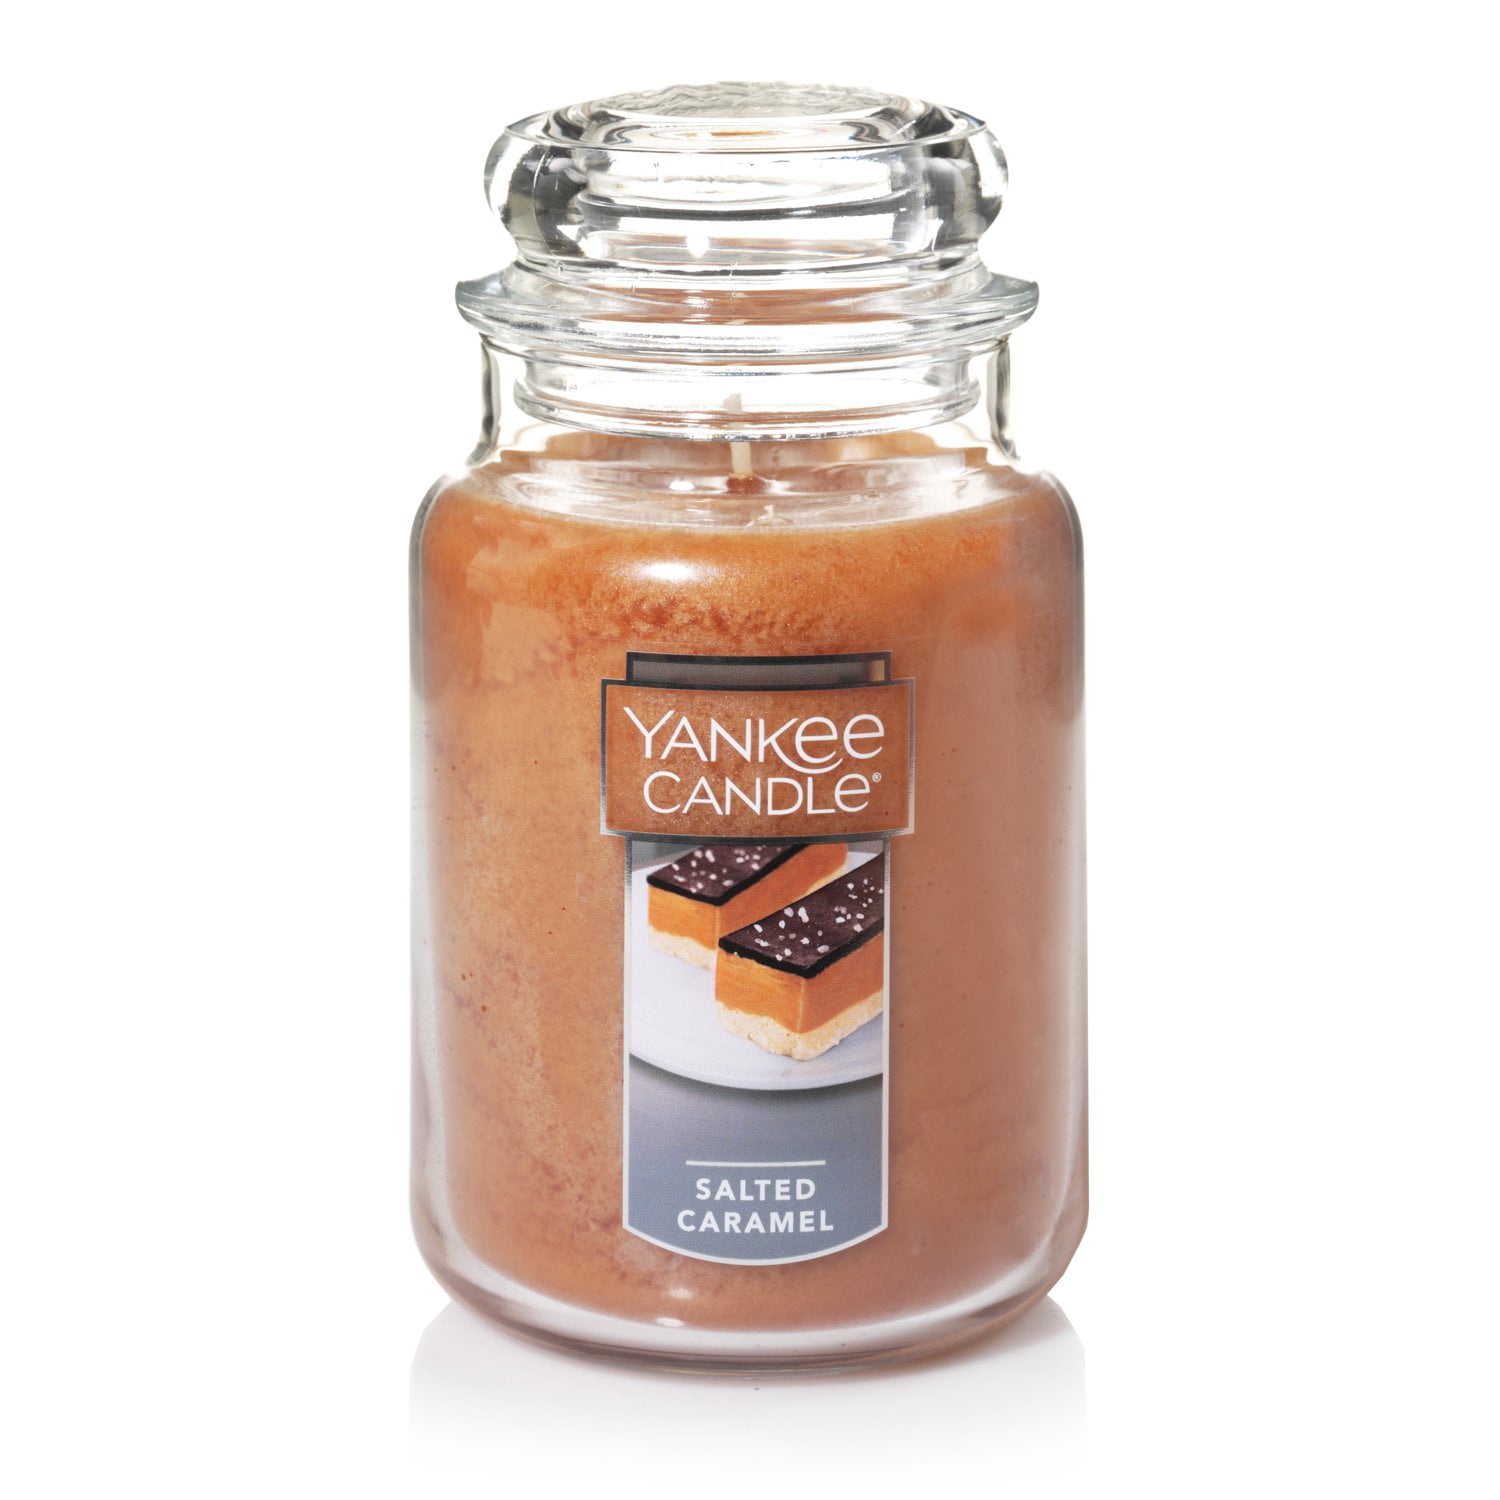 Yankee Candle Large Jar Candle, Salted Caramel